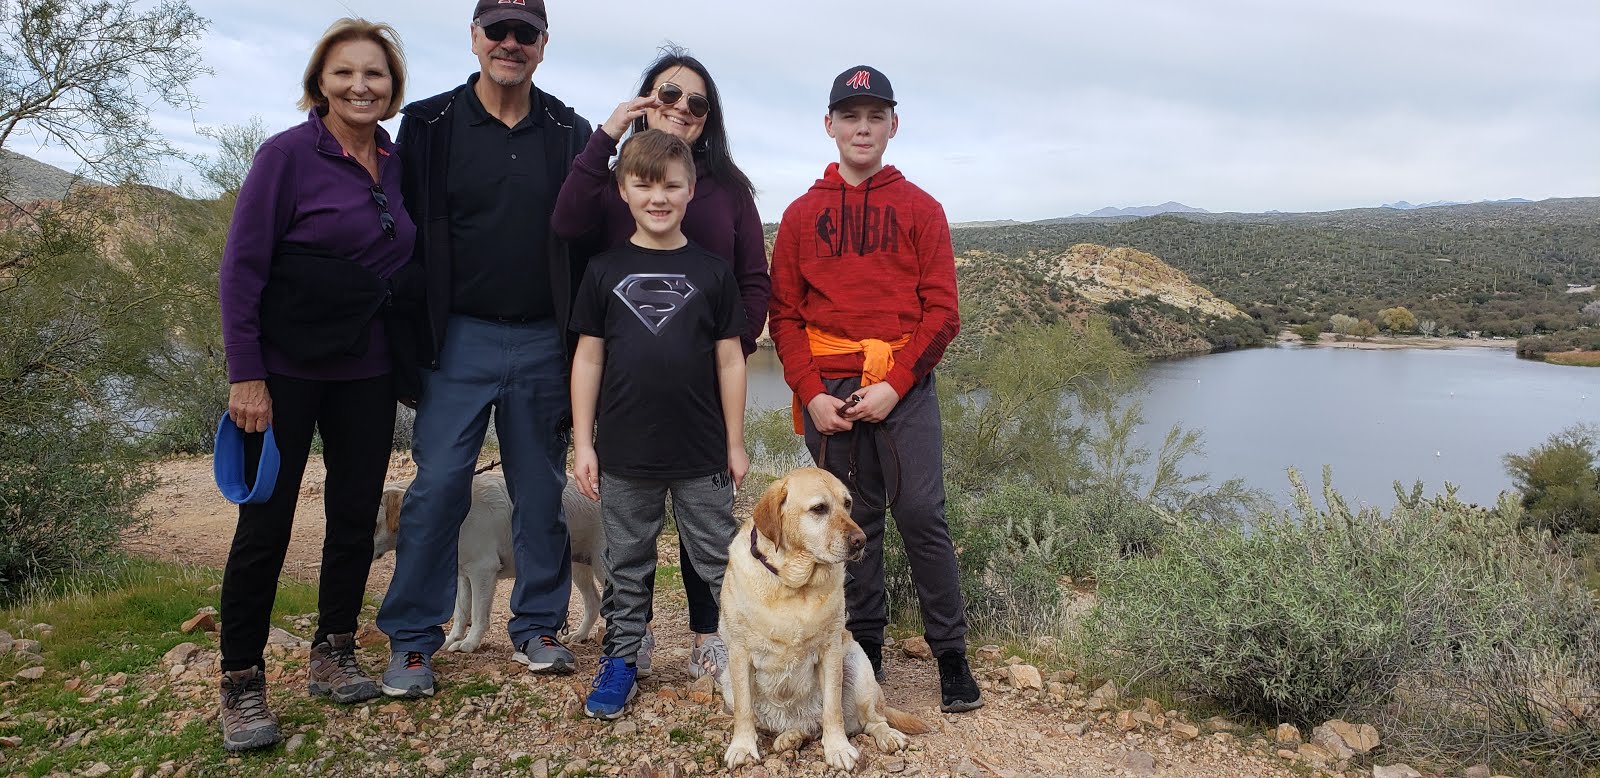 Family Hike in Arizona